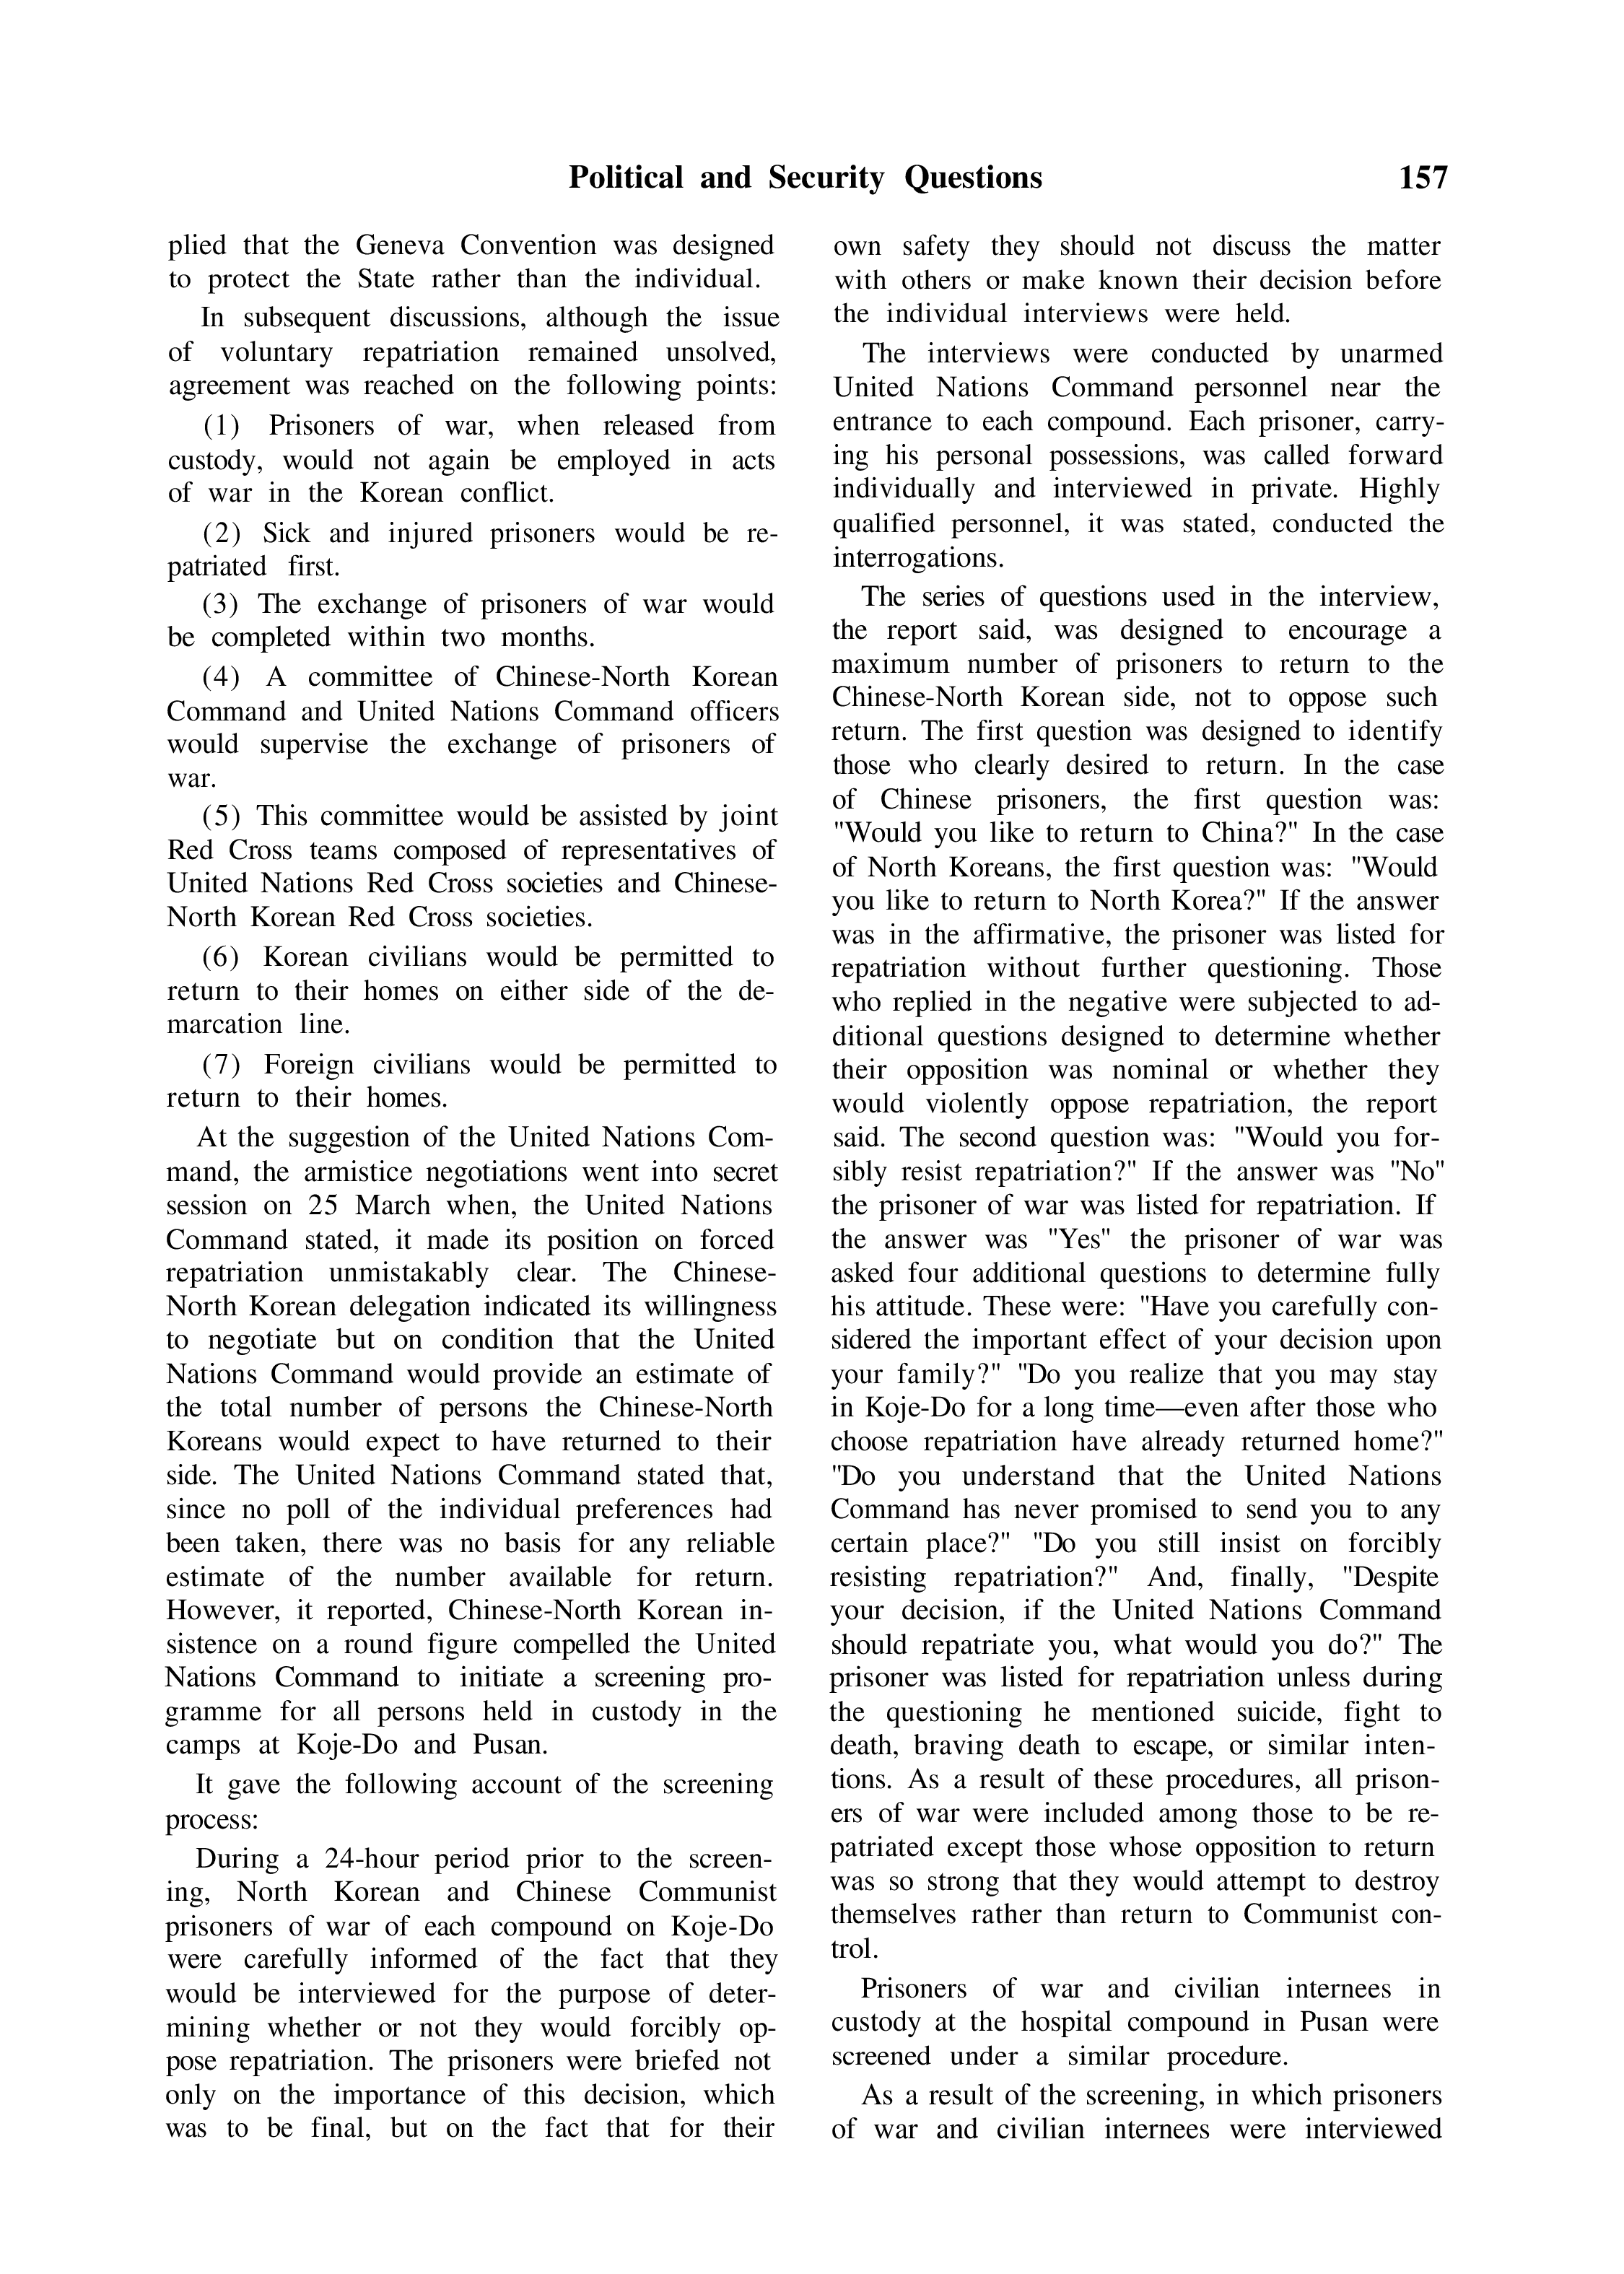 YUN Volume_Page 1952_166